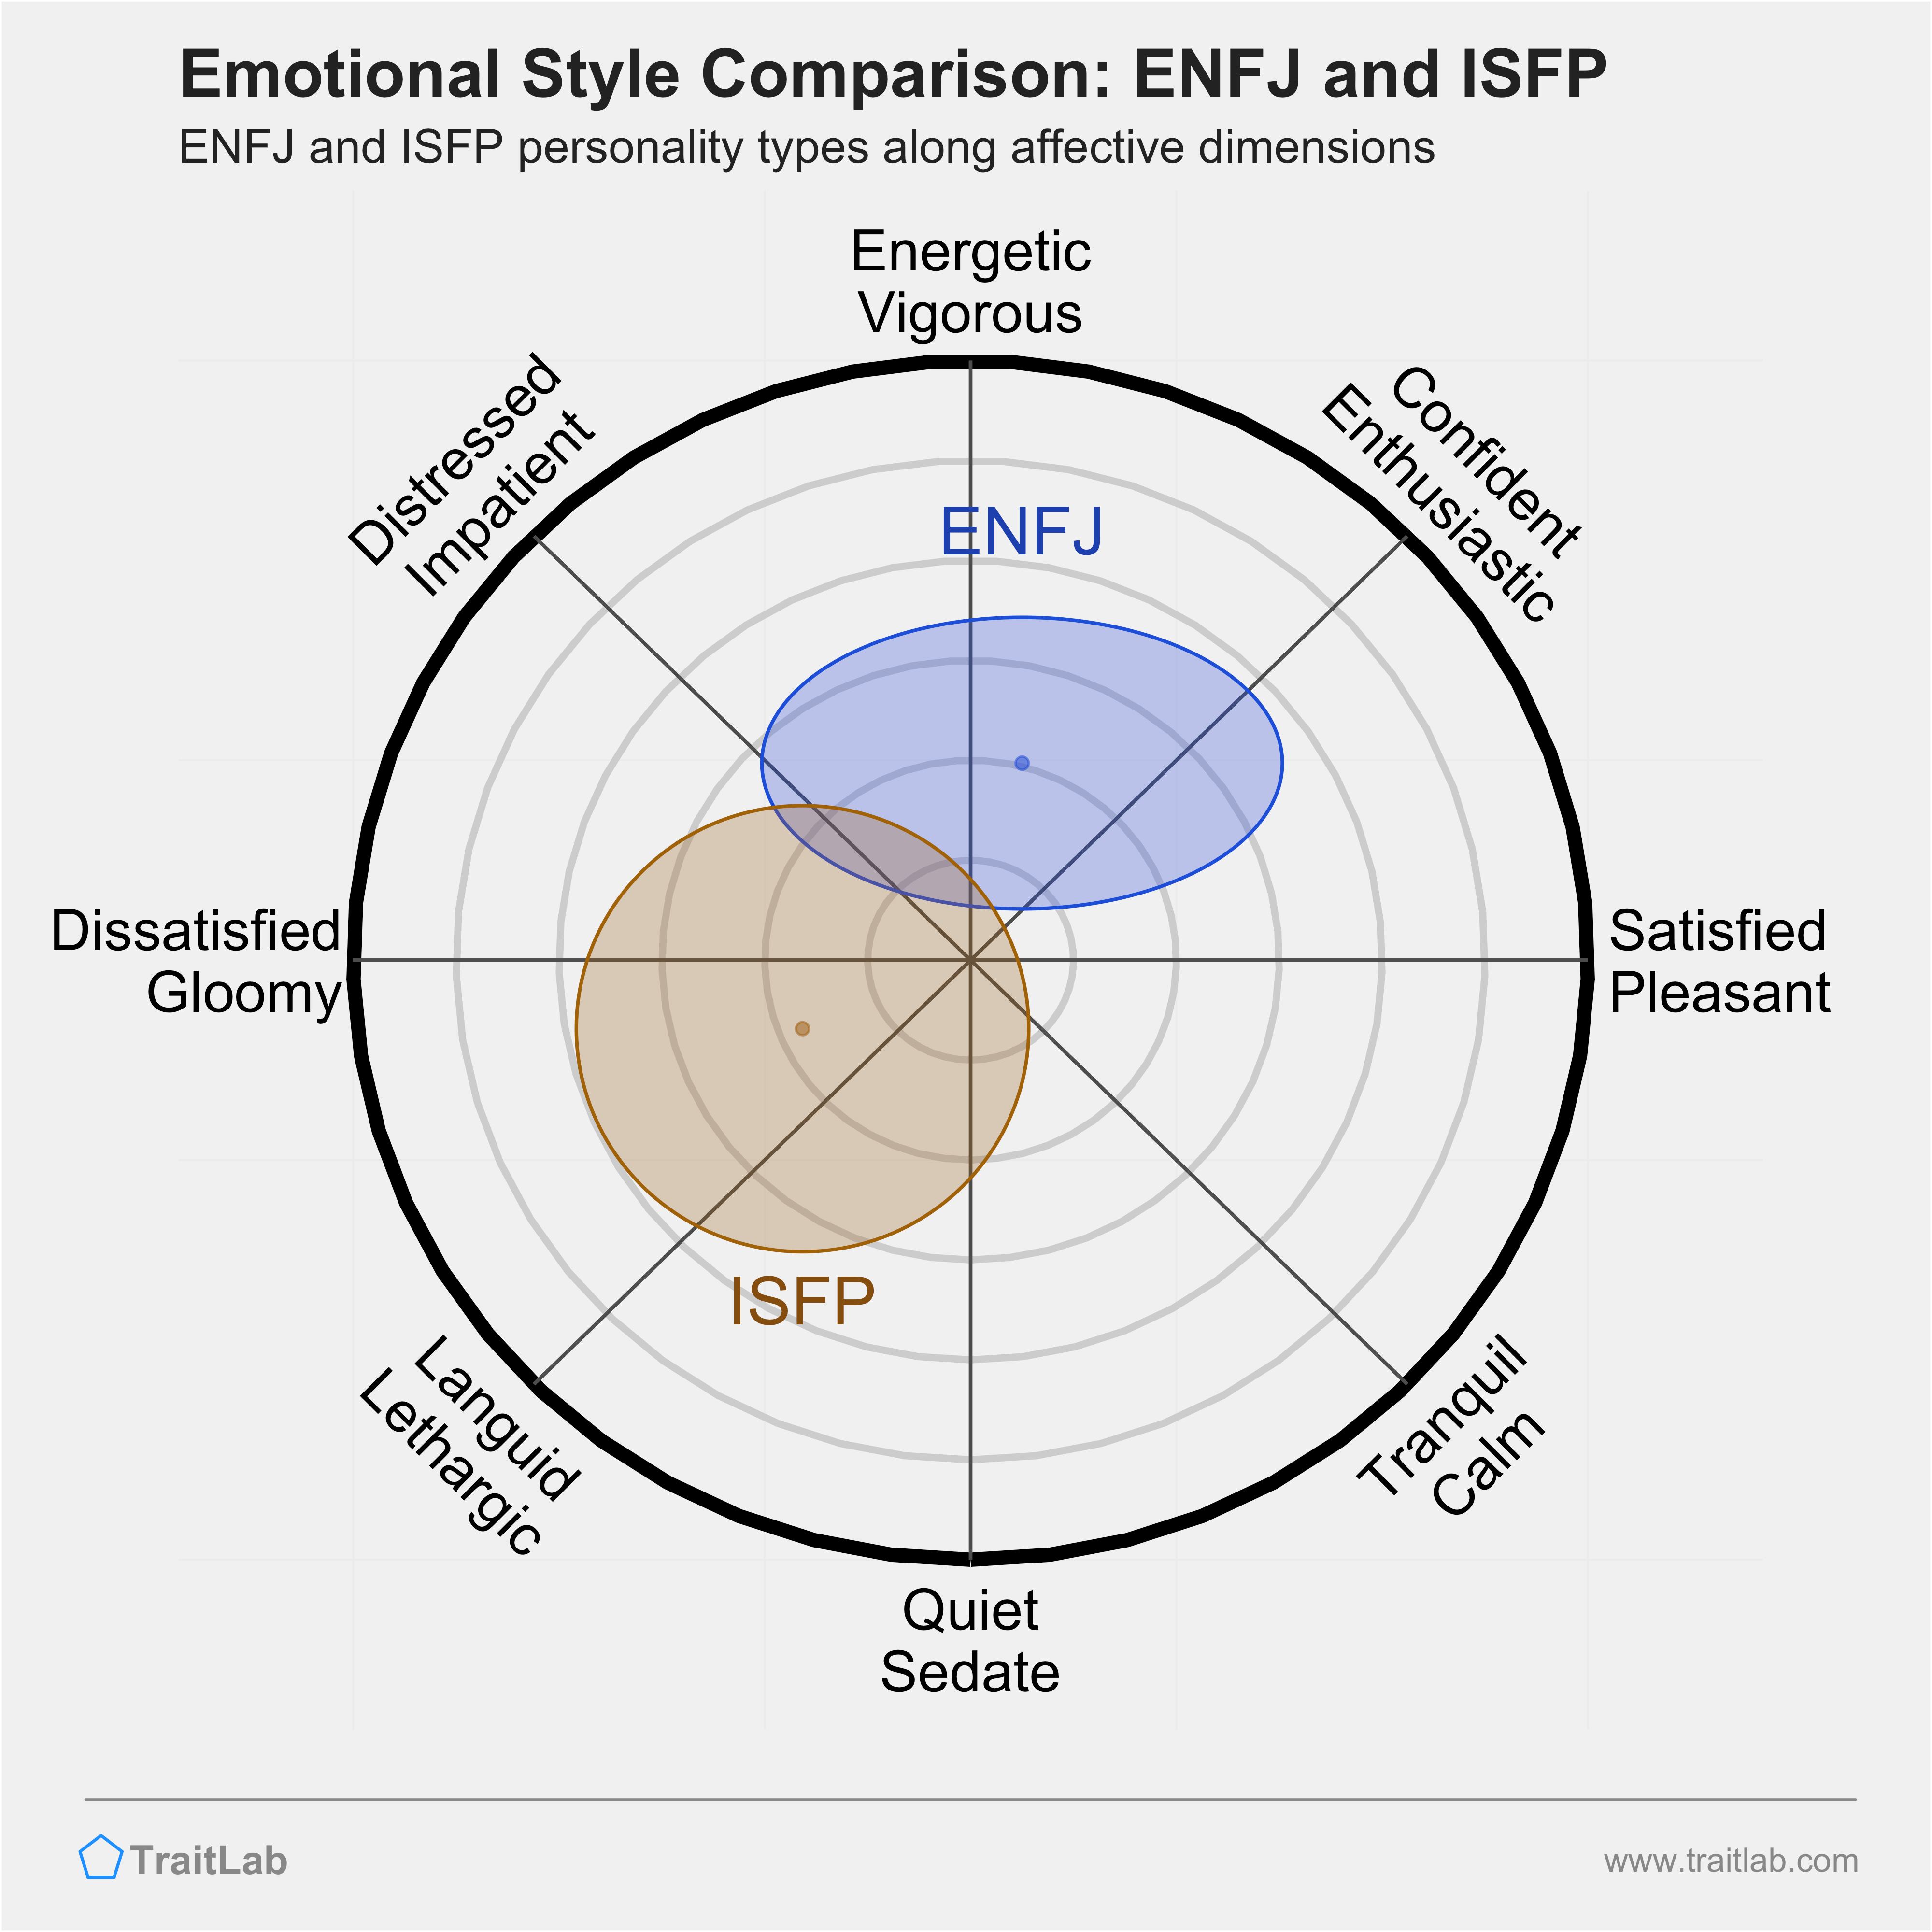 ENFJ and ISFP comparison across emotional (affective) dimensions